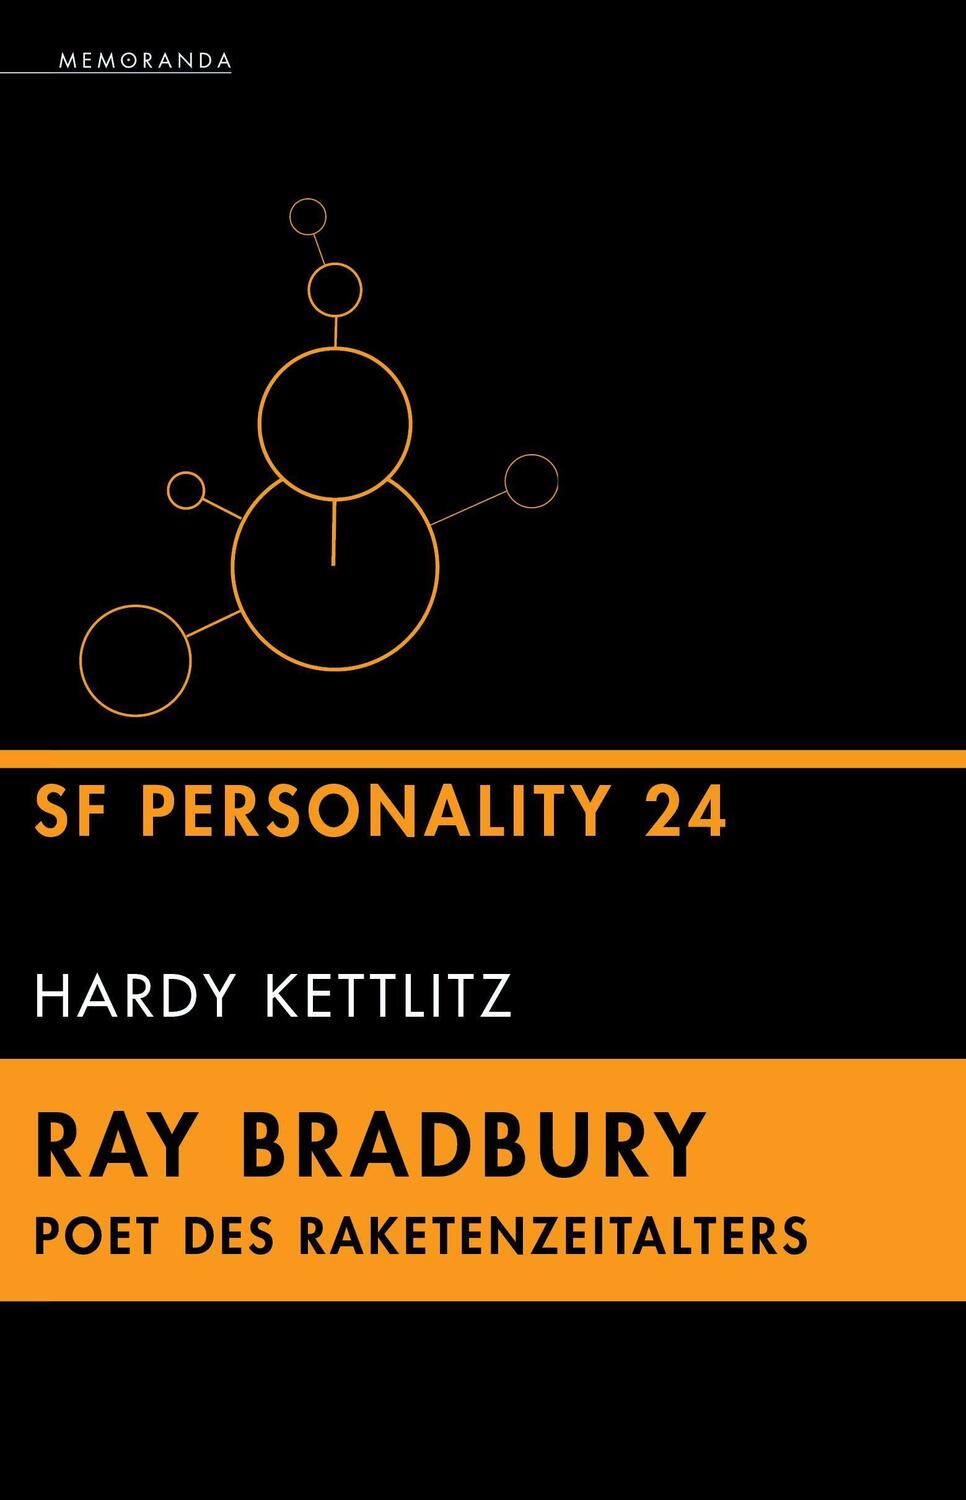 Ray Bradbury - Poet des Raketenzeitalters - Kettlitz, Hardy